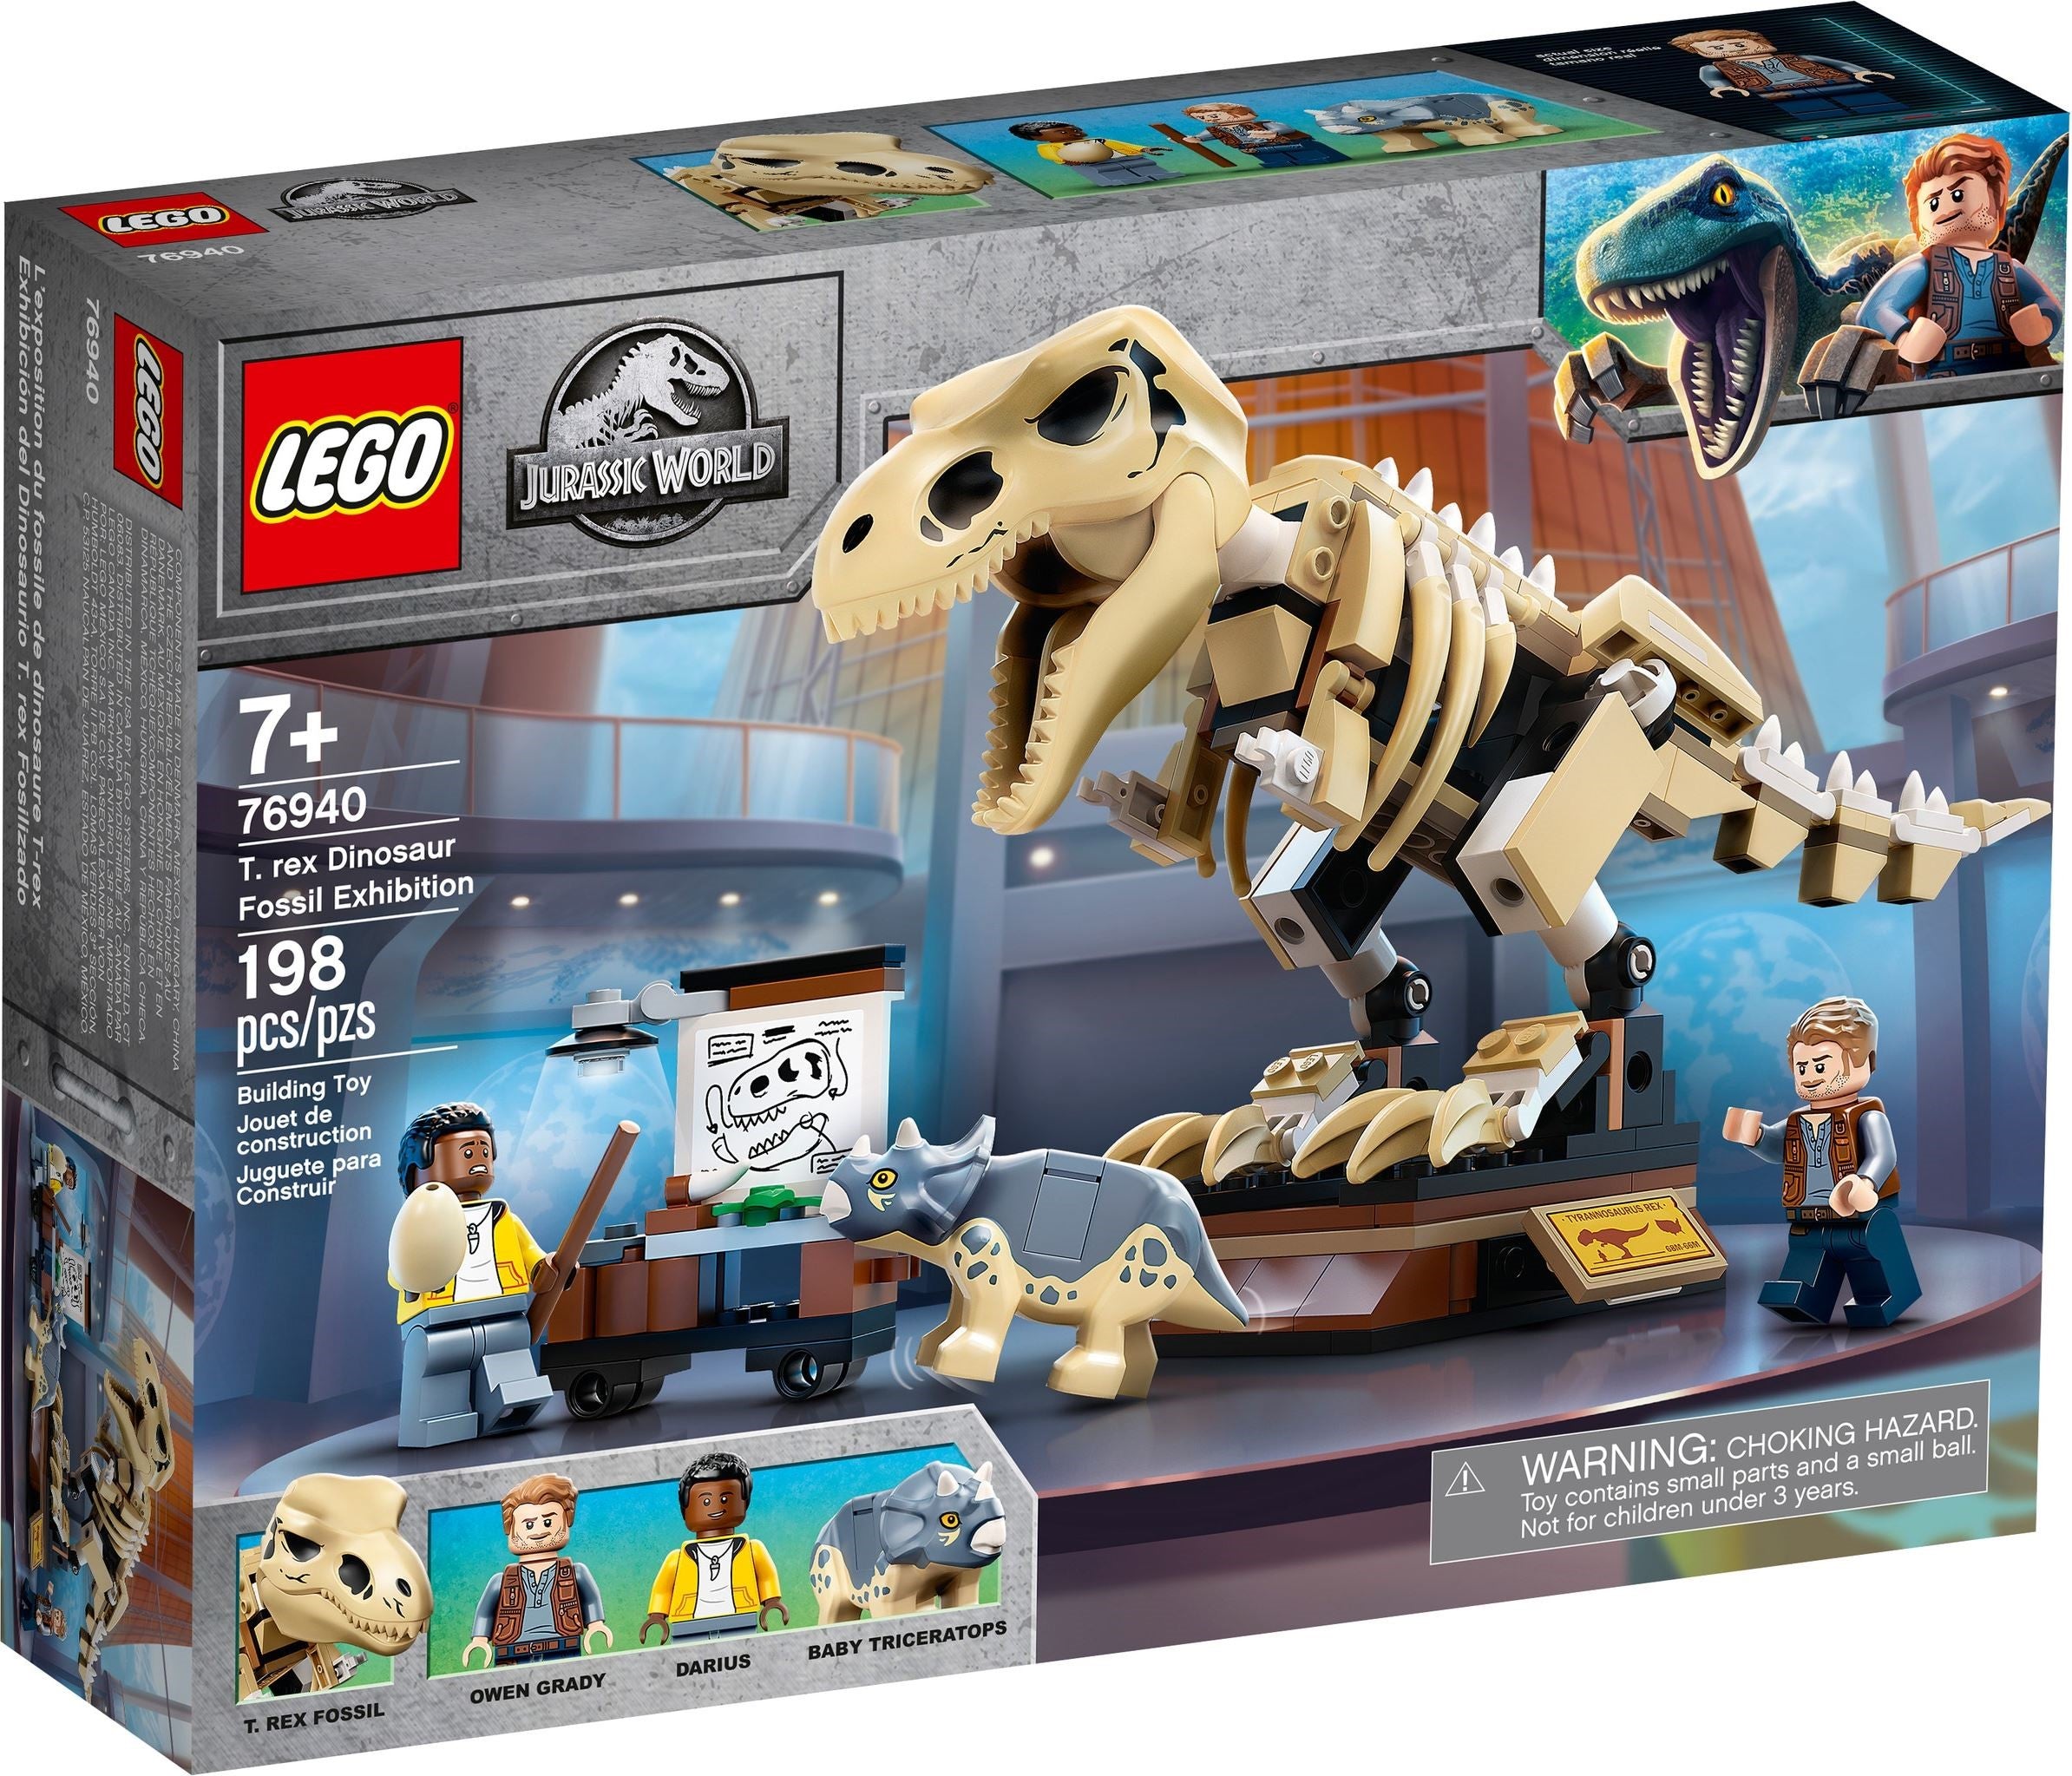 Lego Jurassic World 76940 - T. rex Dinosaur Fossil Exhibition